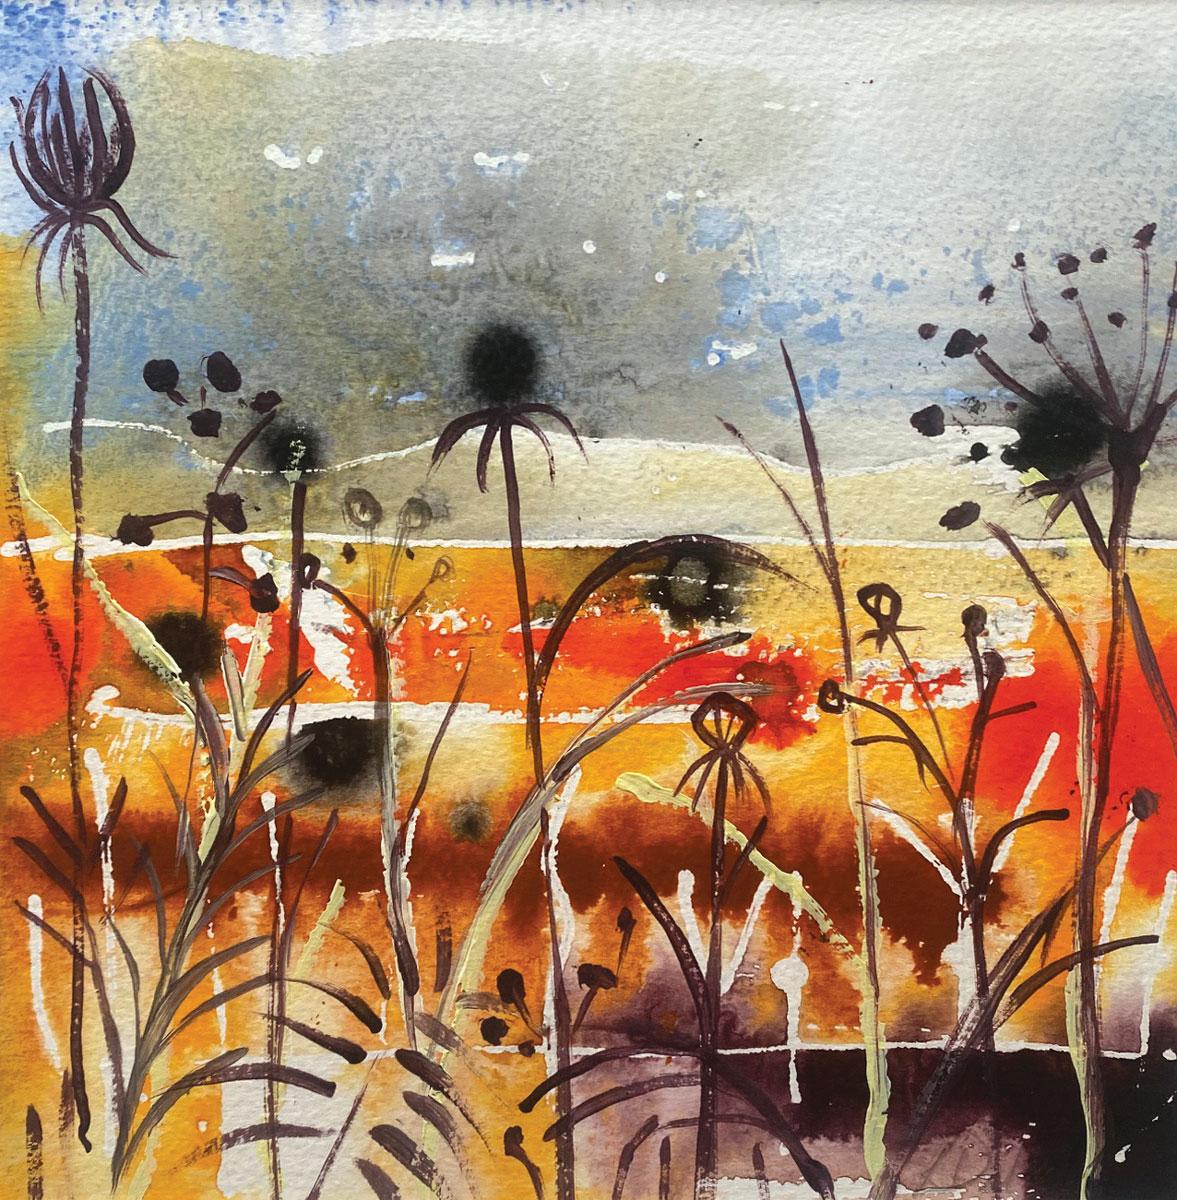 Winter fields by Rachael Dalzell. Acrylic on paper. 